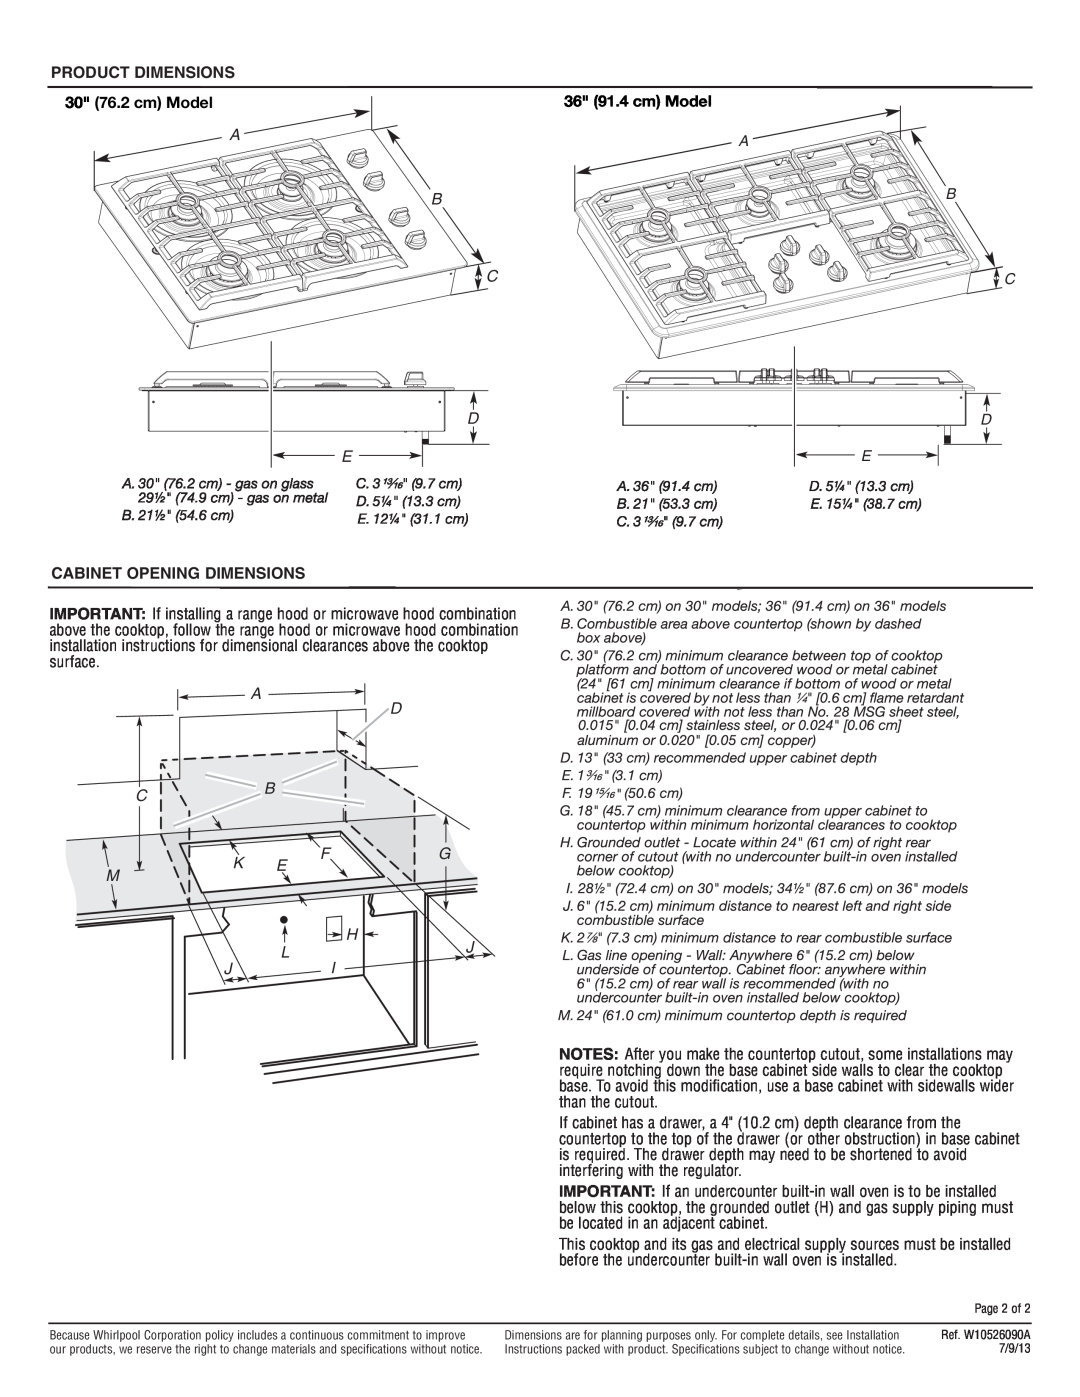 Maytag MGC7536W Cabinet Opening Dimensions, A D Cb, Fg H, Lj Ji, Product Dimensions, 30 76.2 cm Model, 36 91.4 cm Model 